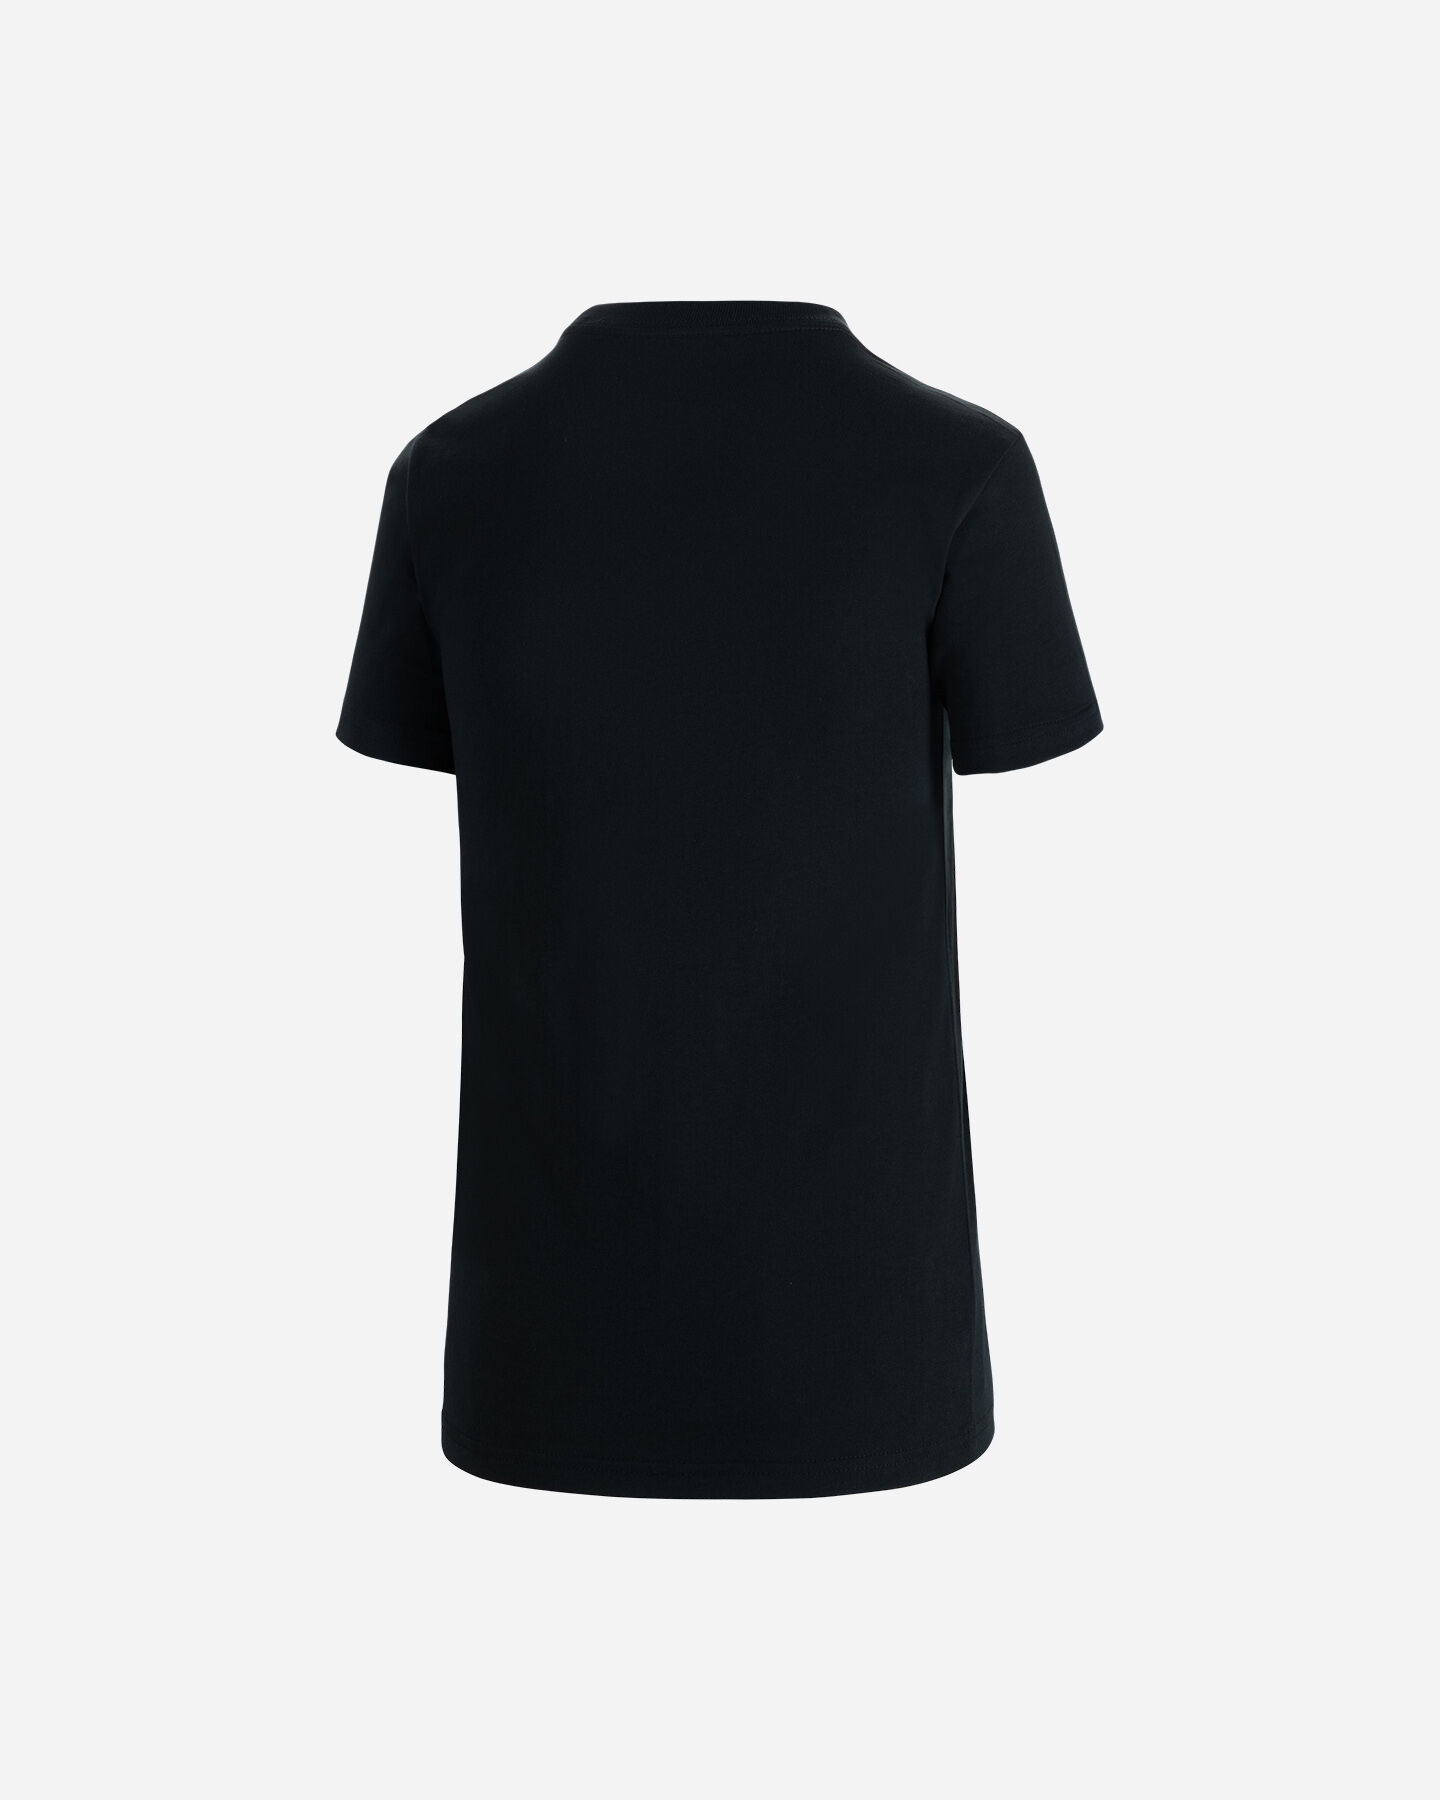  T-Shirt CONVERSE METALLIC CHUCK PATCH W S5497519 scatto 1